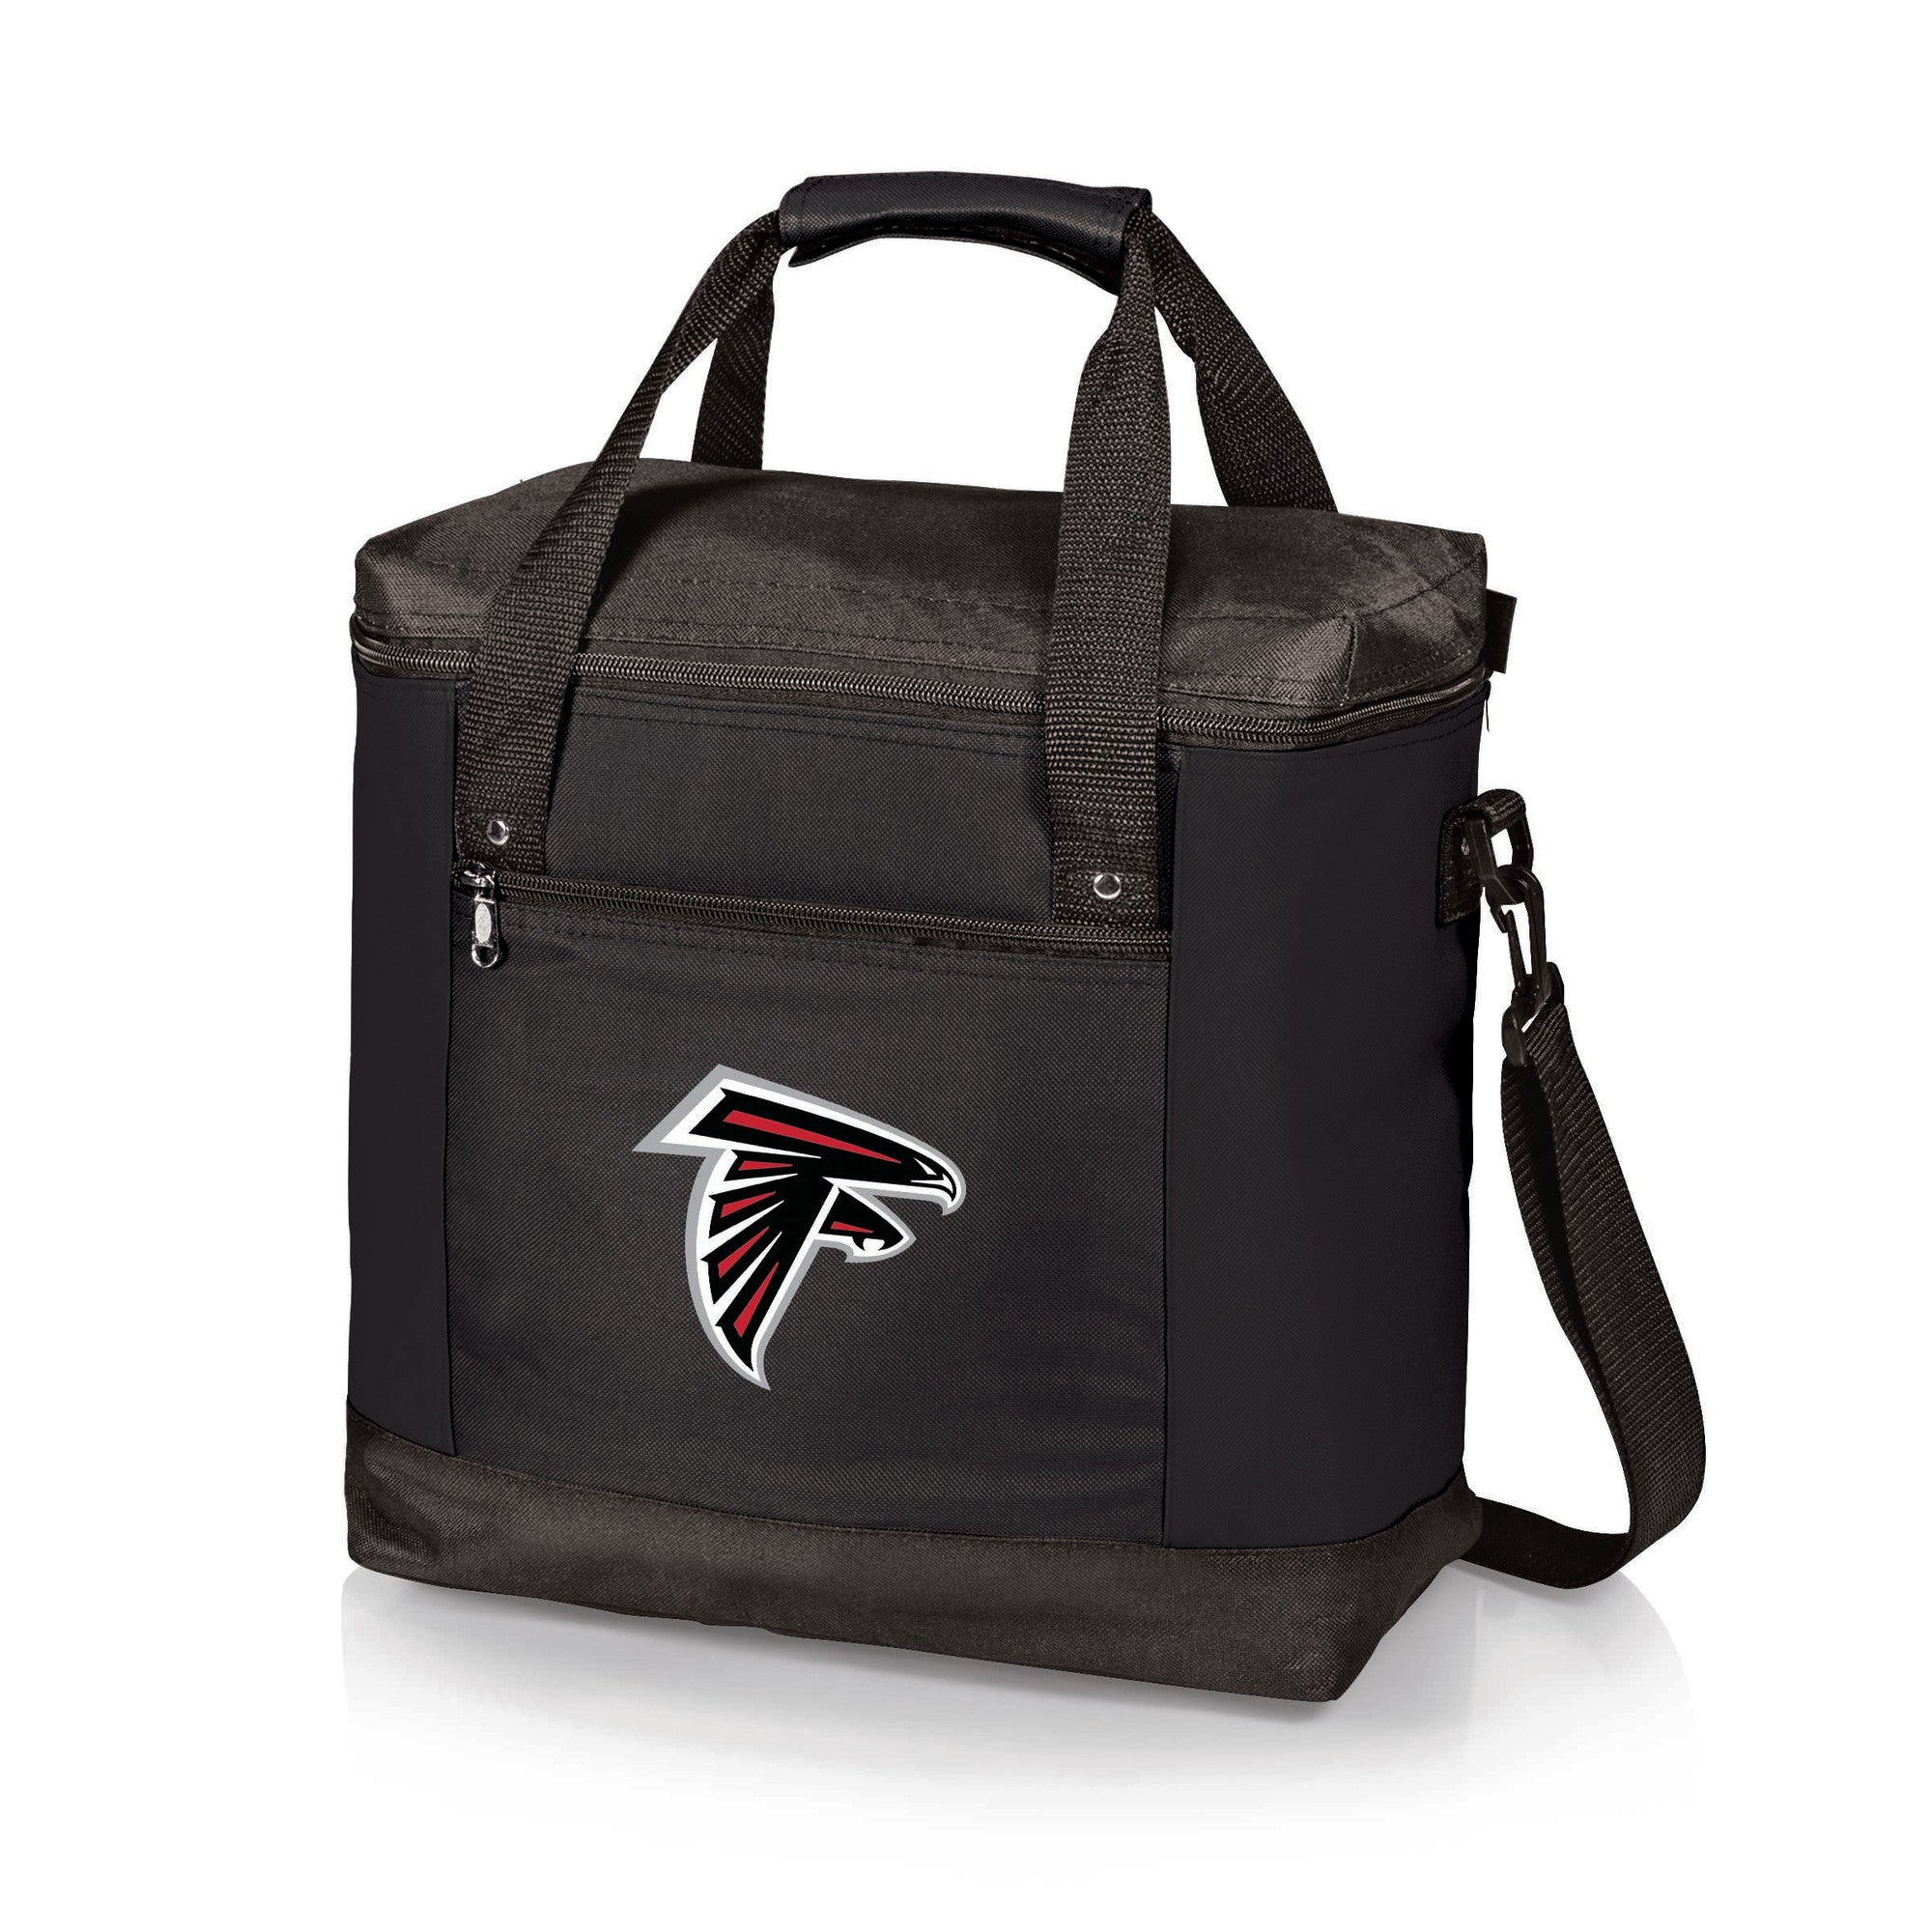 Atlanta Falcons - Montero Cooler Tote Bag